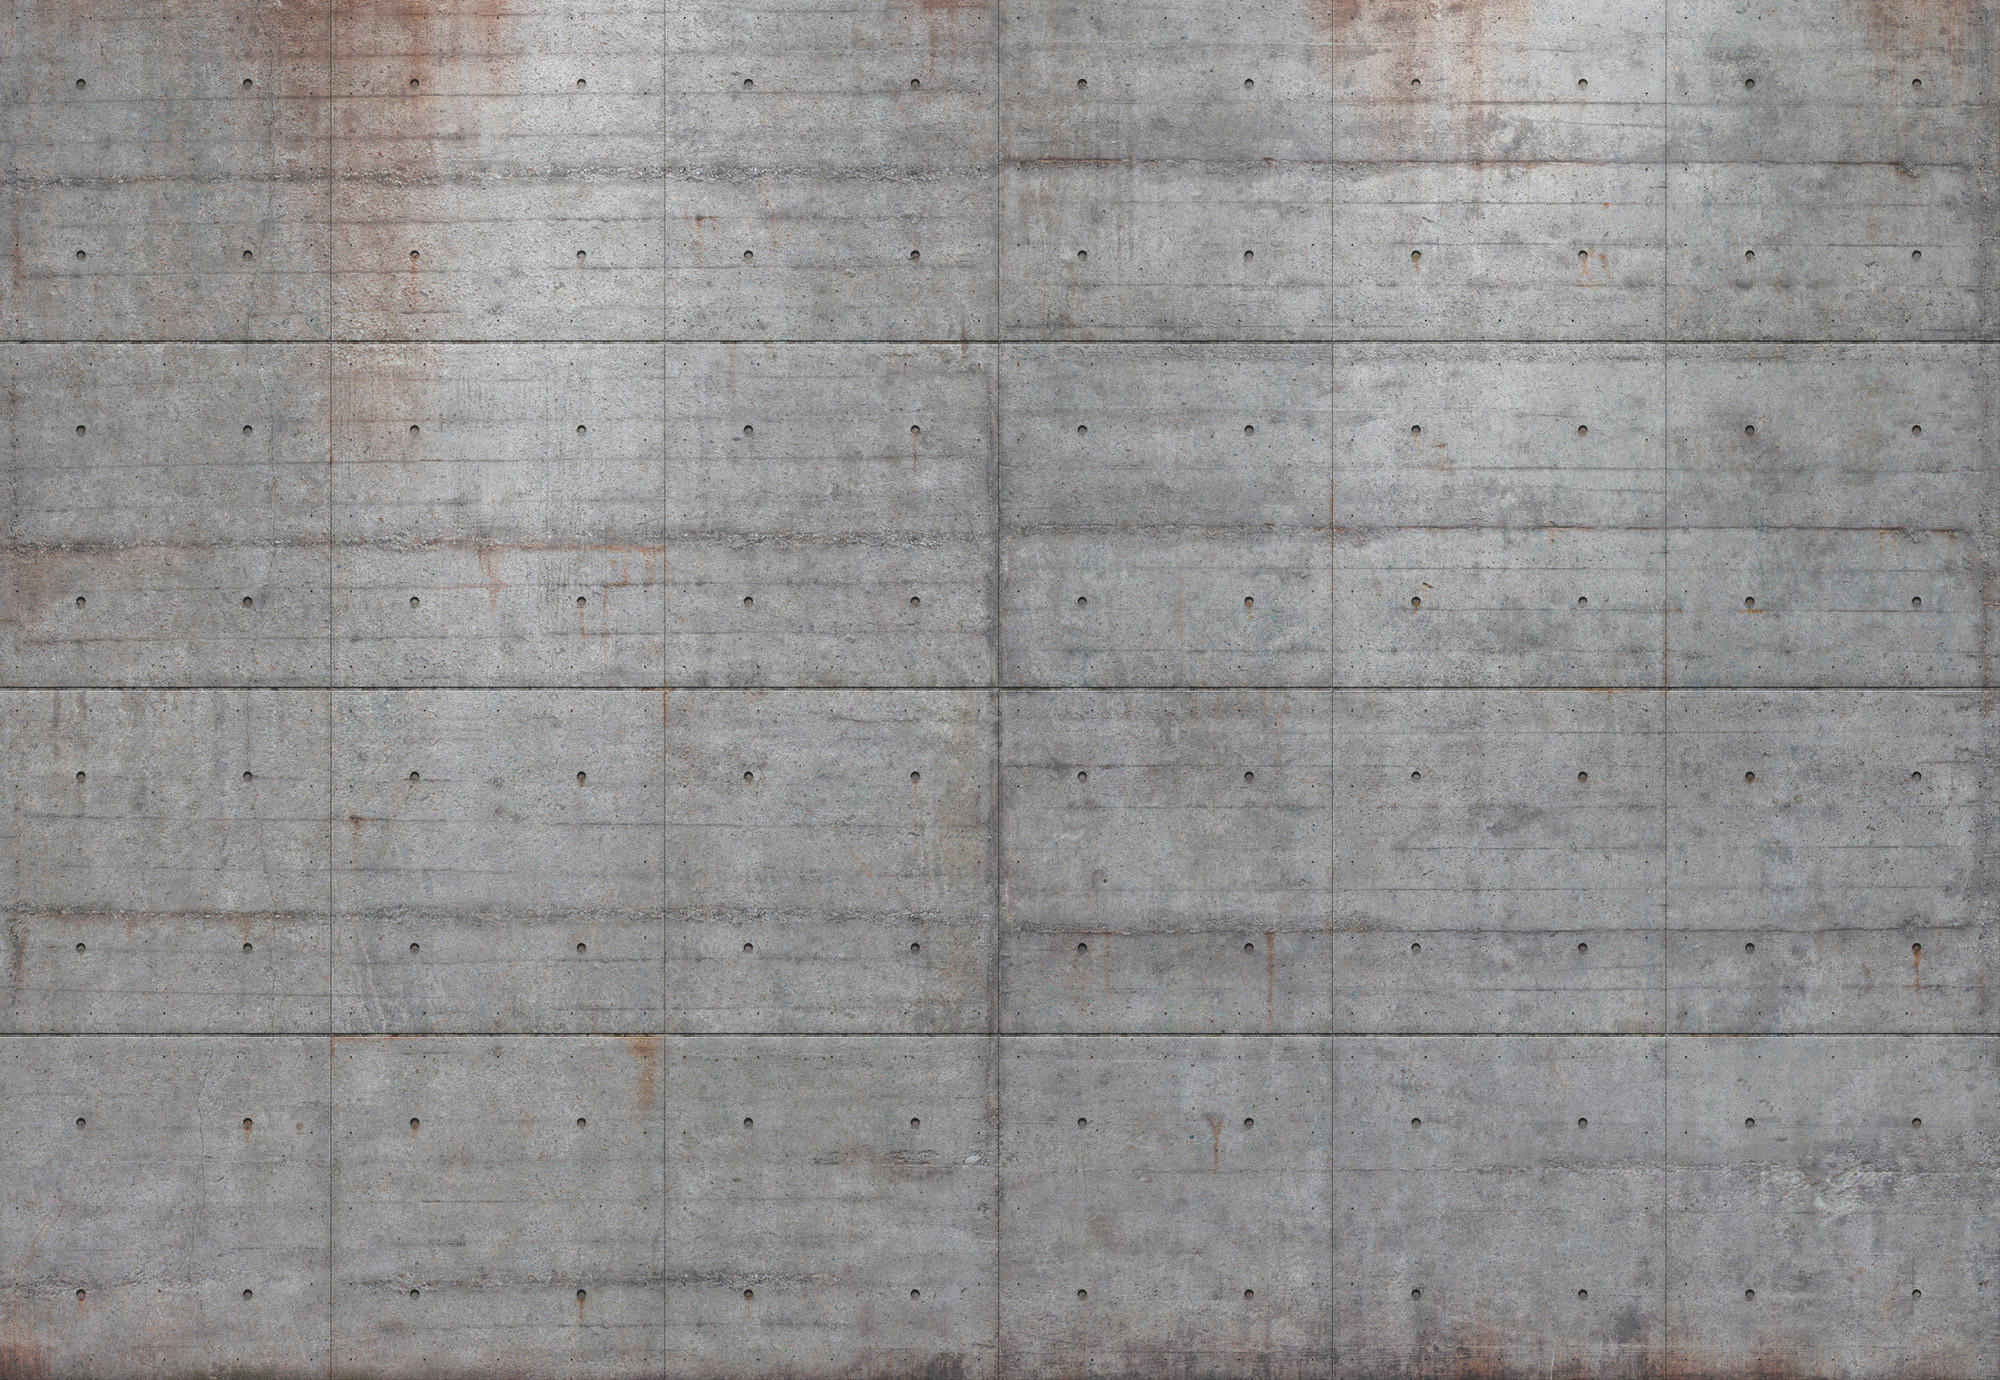 Fototapete Concrete Blocks B/L: ca. 368x254 cm